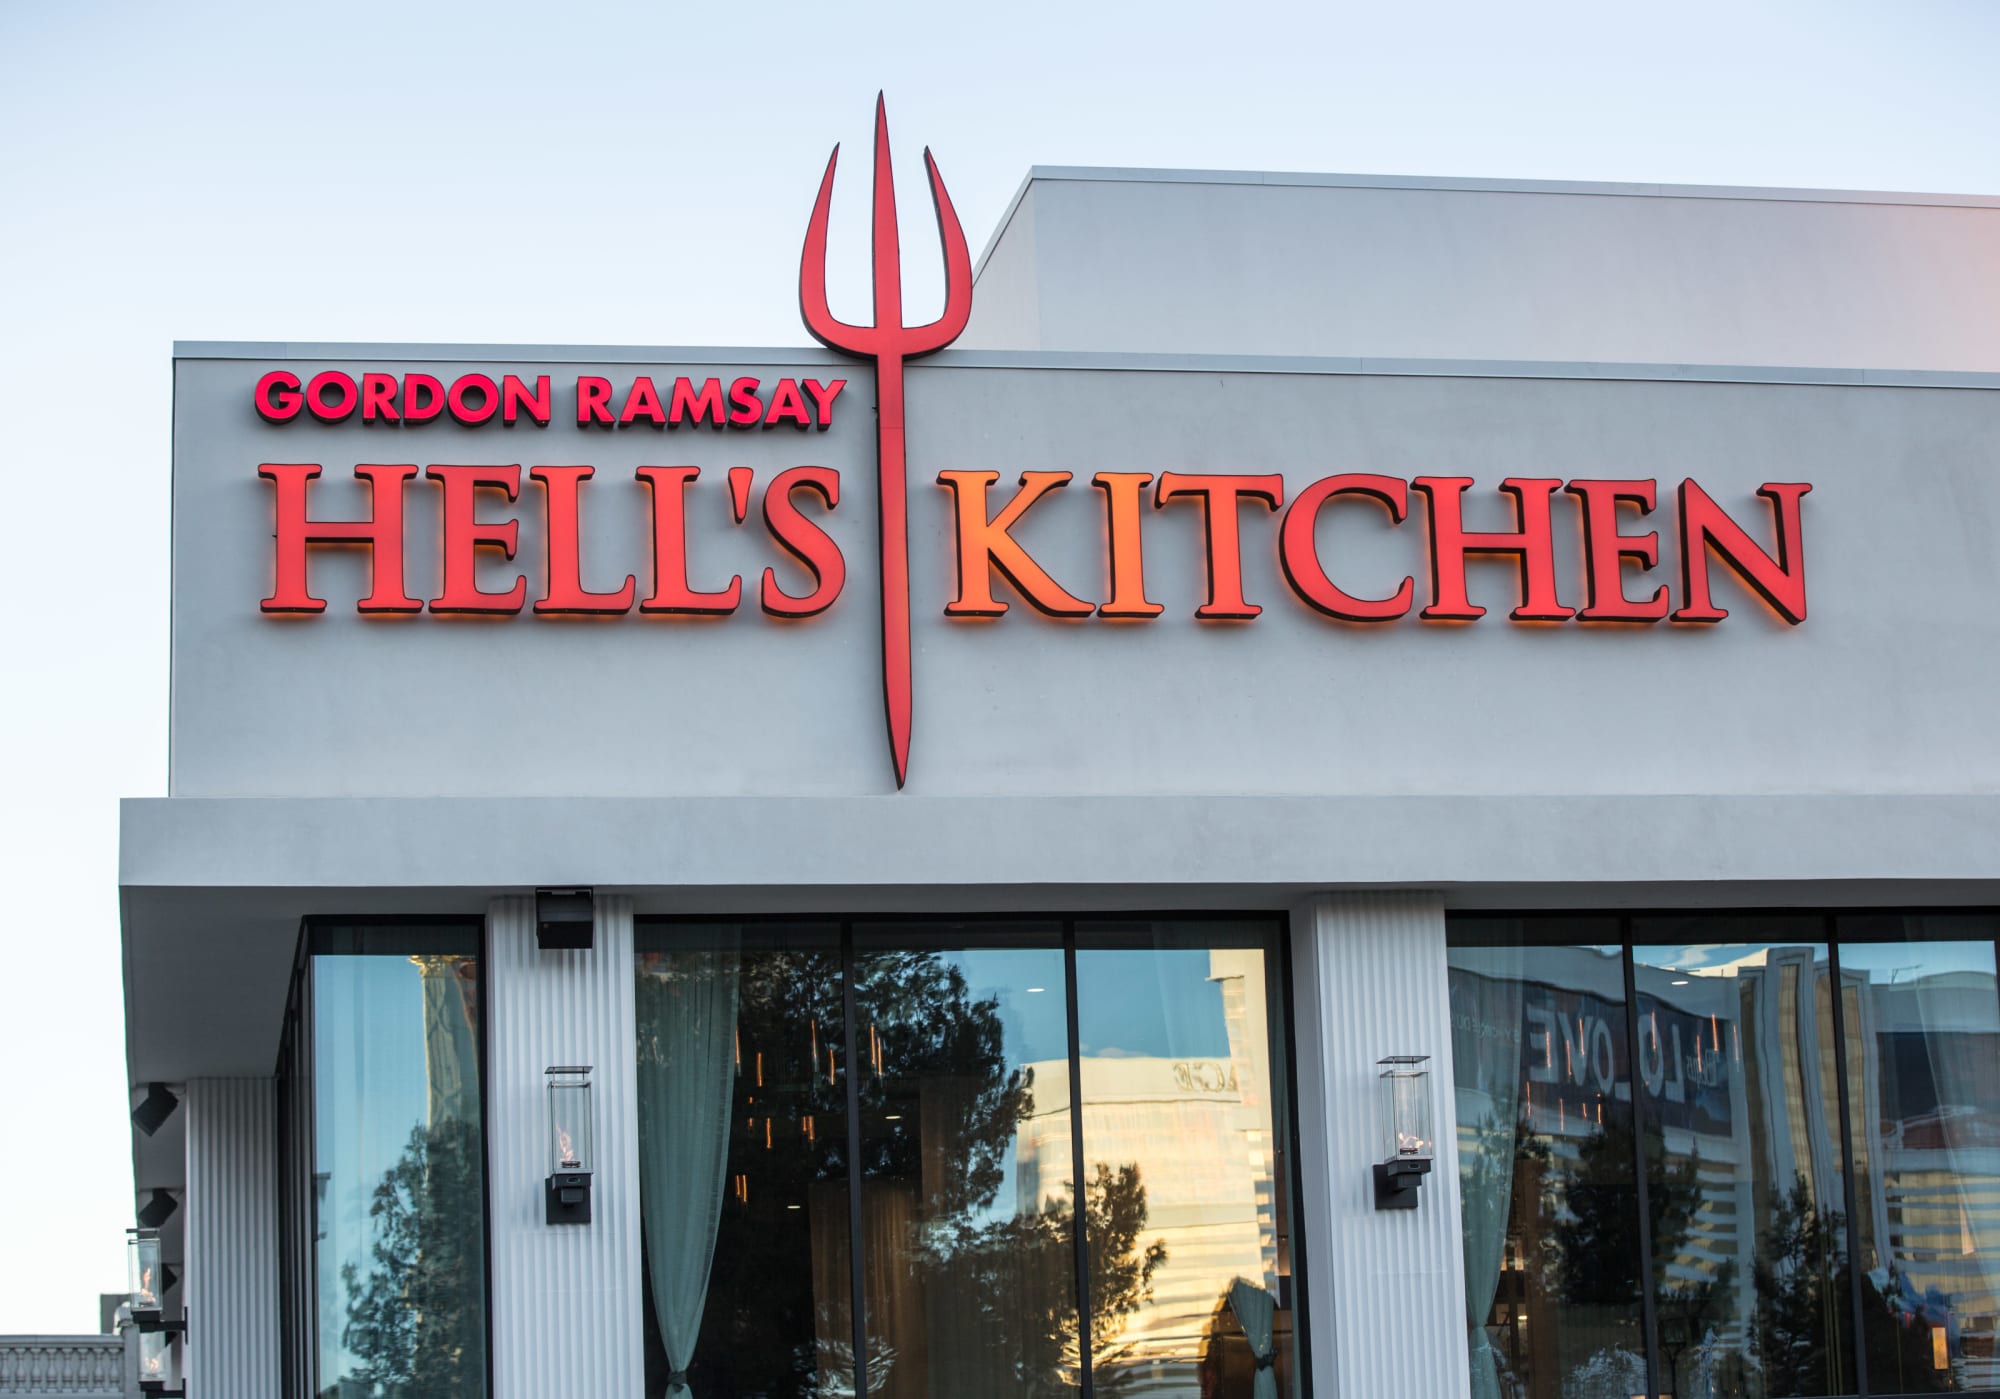 Gordon Ramsay is set to open his third Hell’s Kitchen restaurant